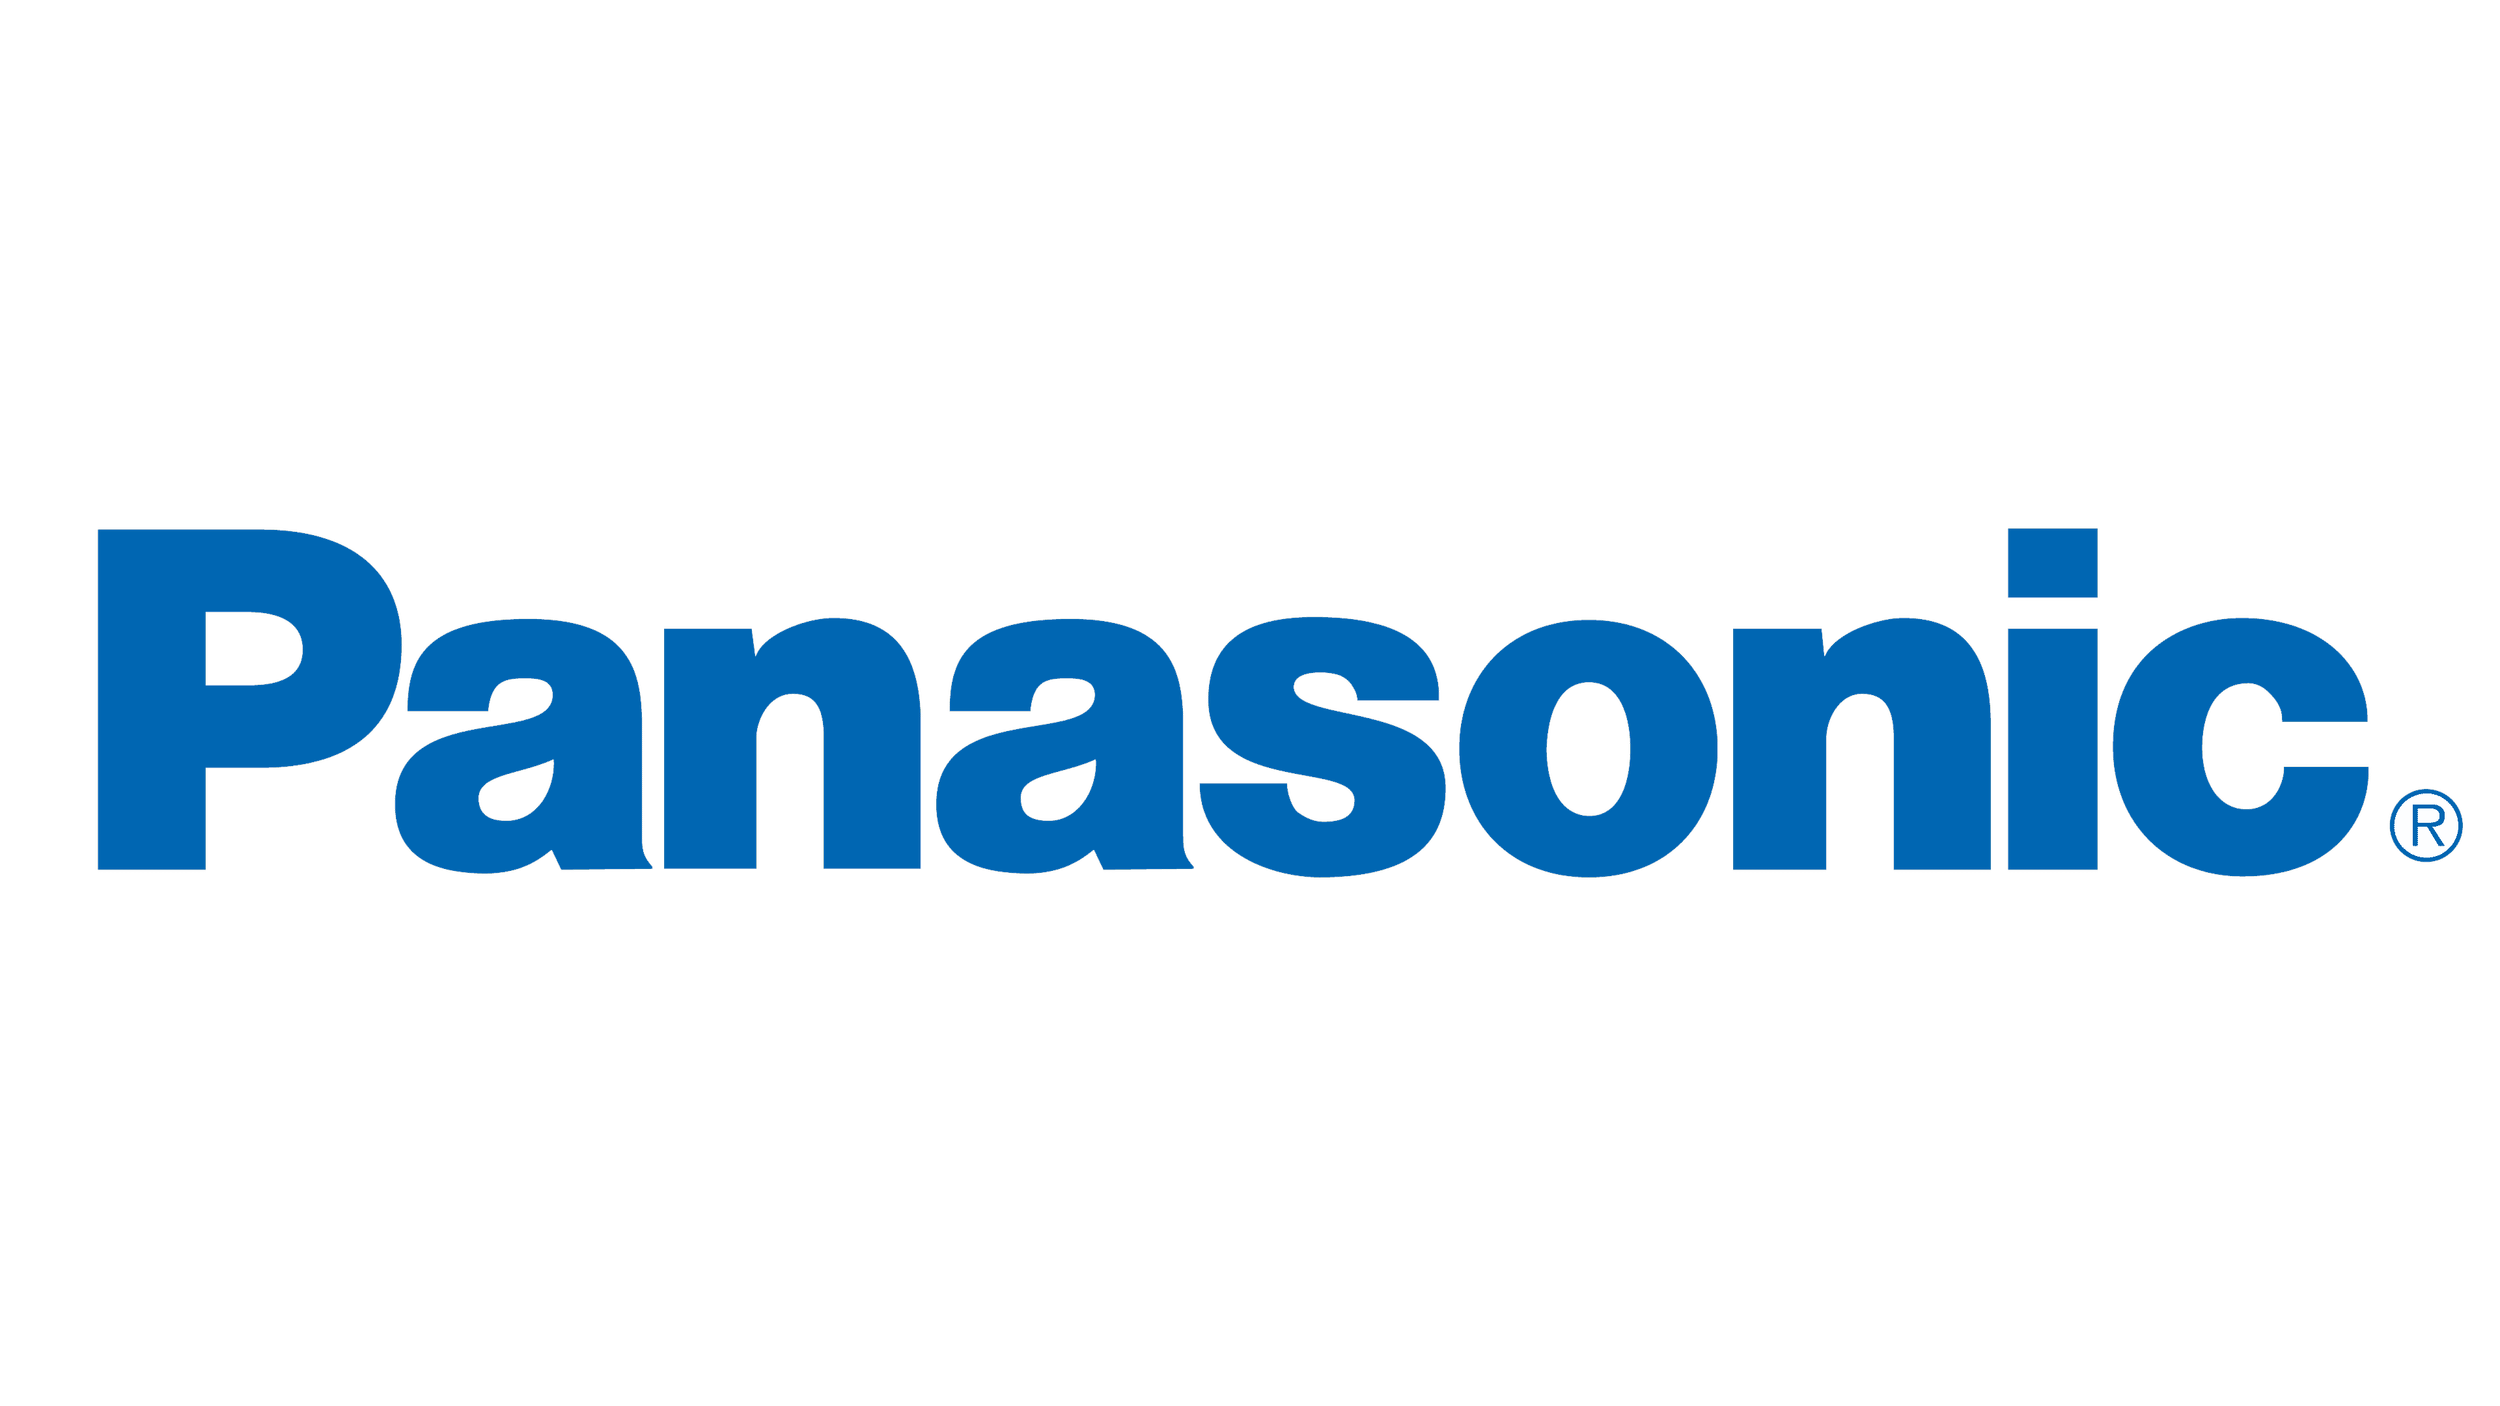 Panasonic-logo.png